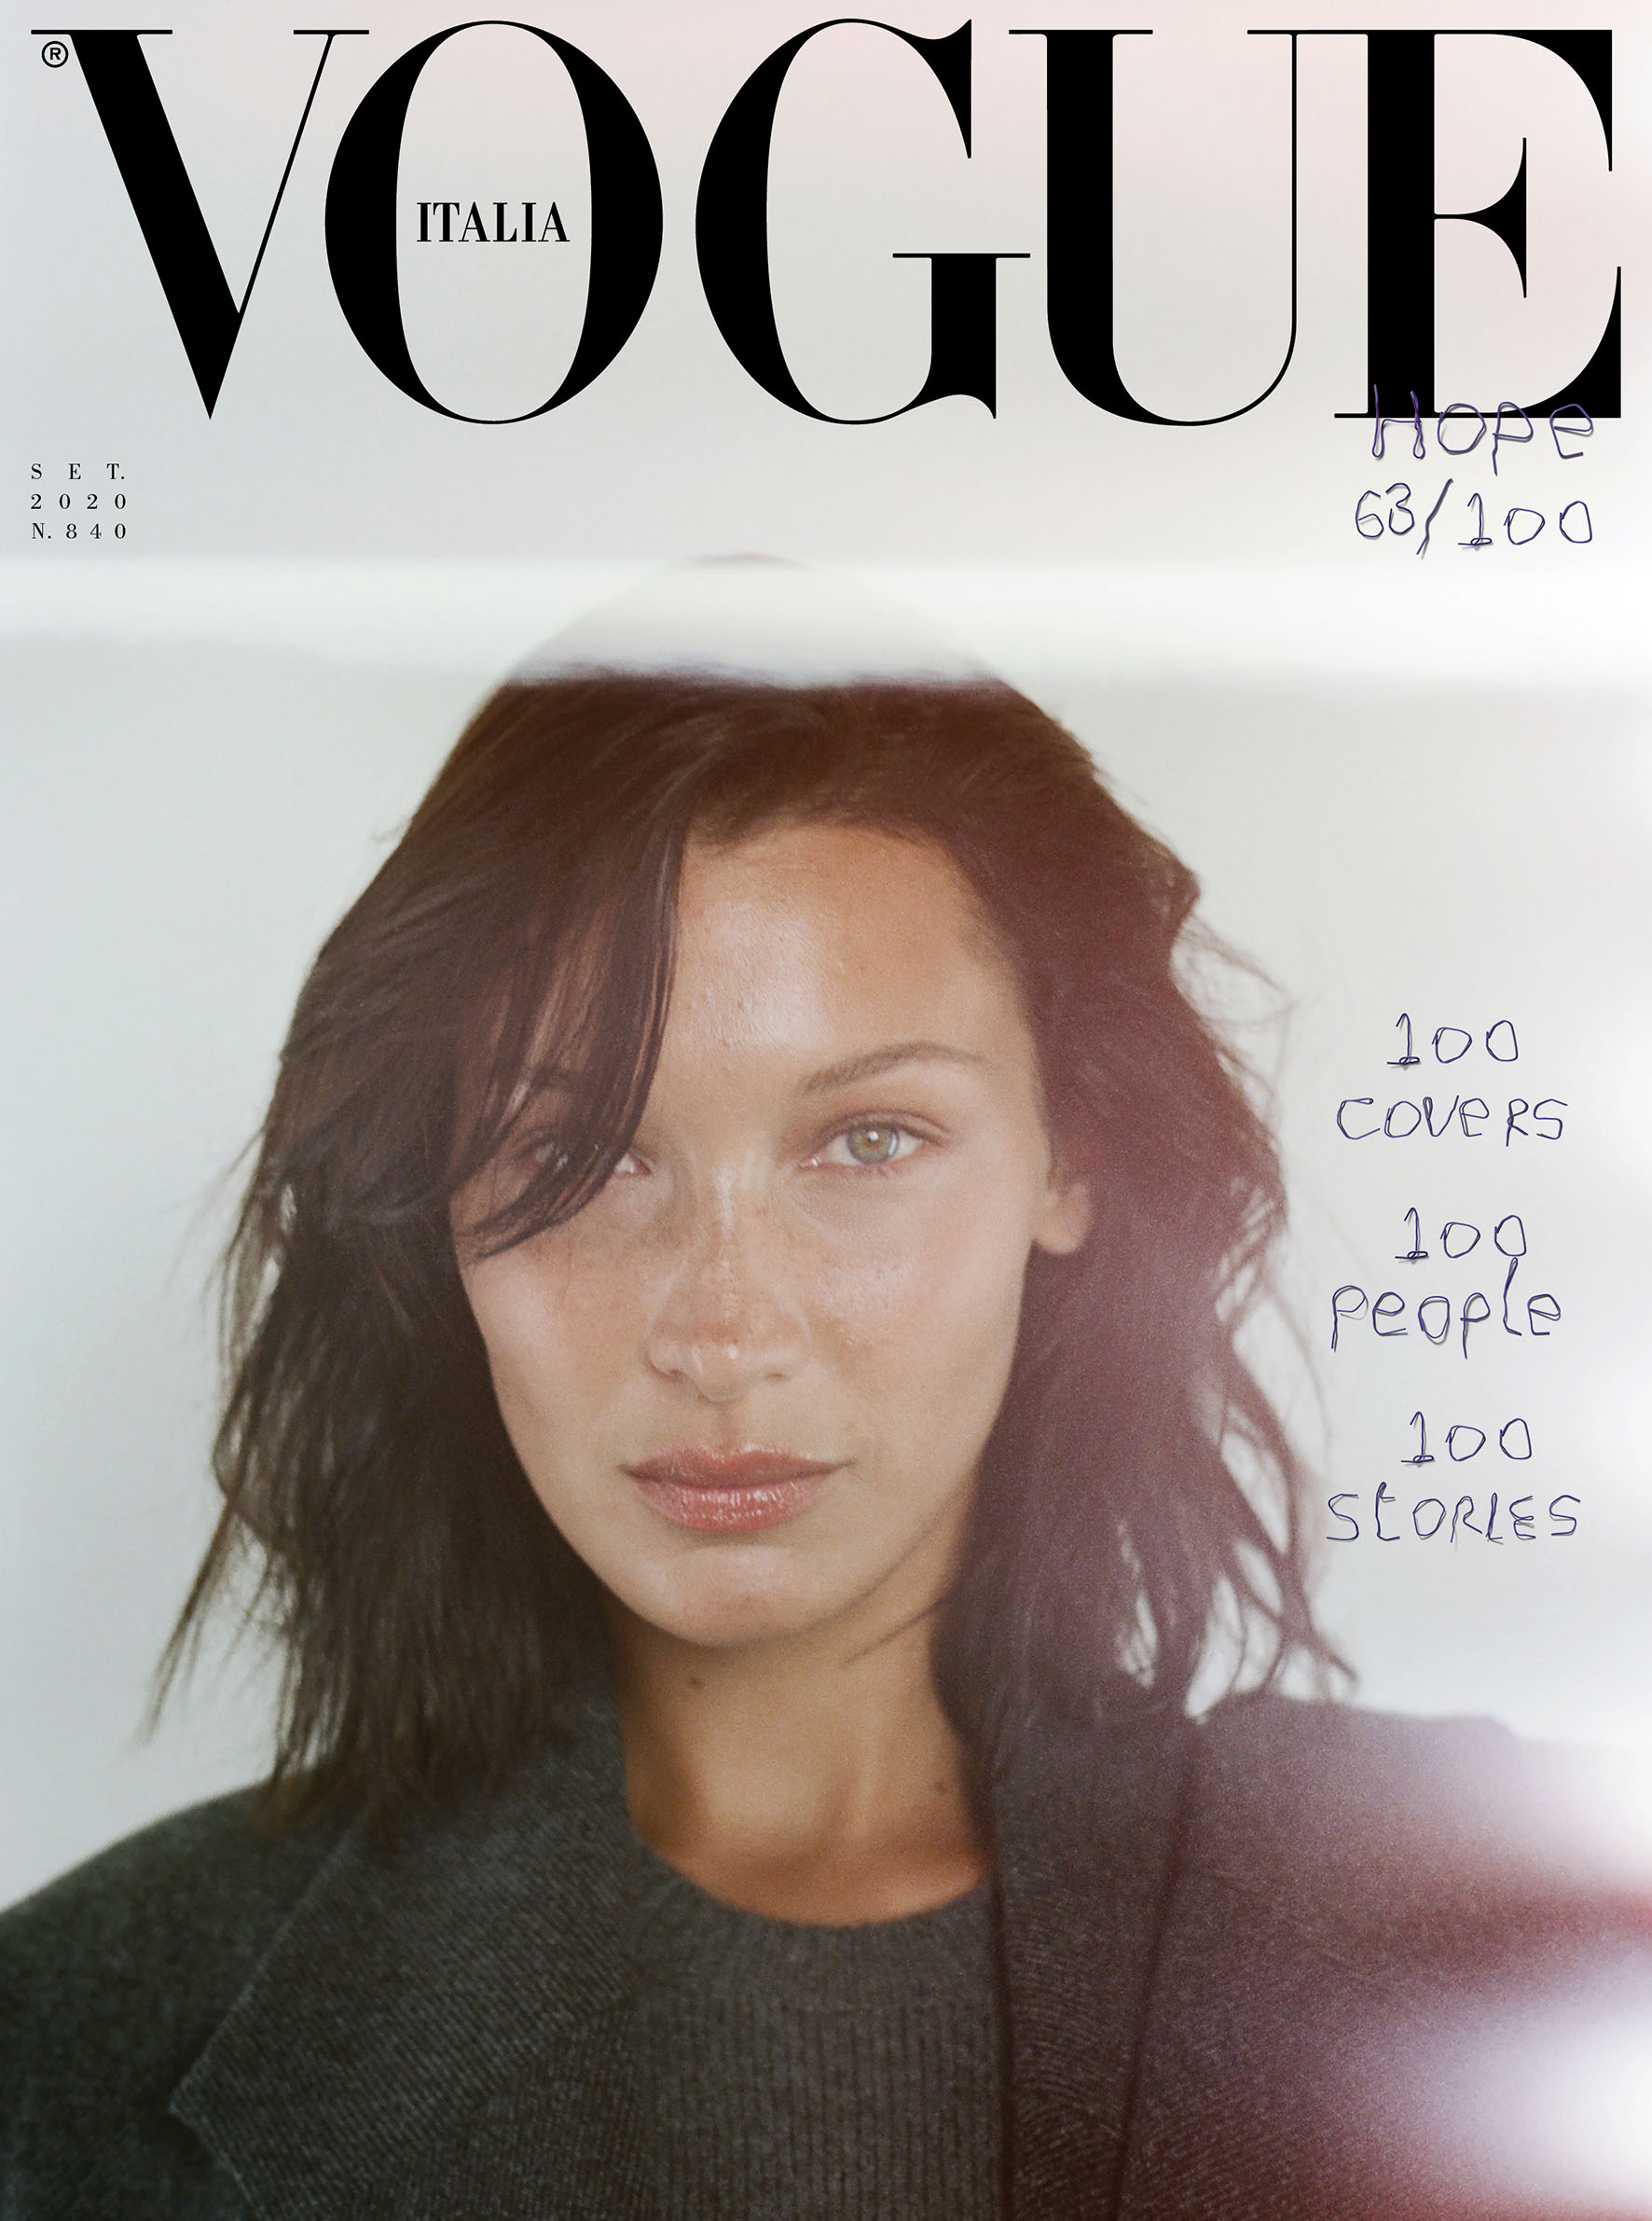 FOTOS Modelos Se renen para 100 portadas de Vogue! - Photo 11